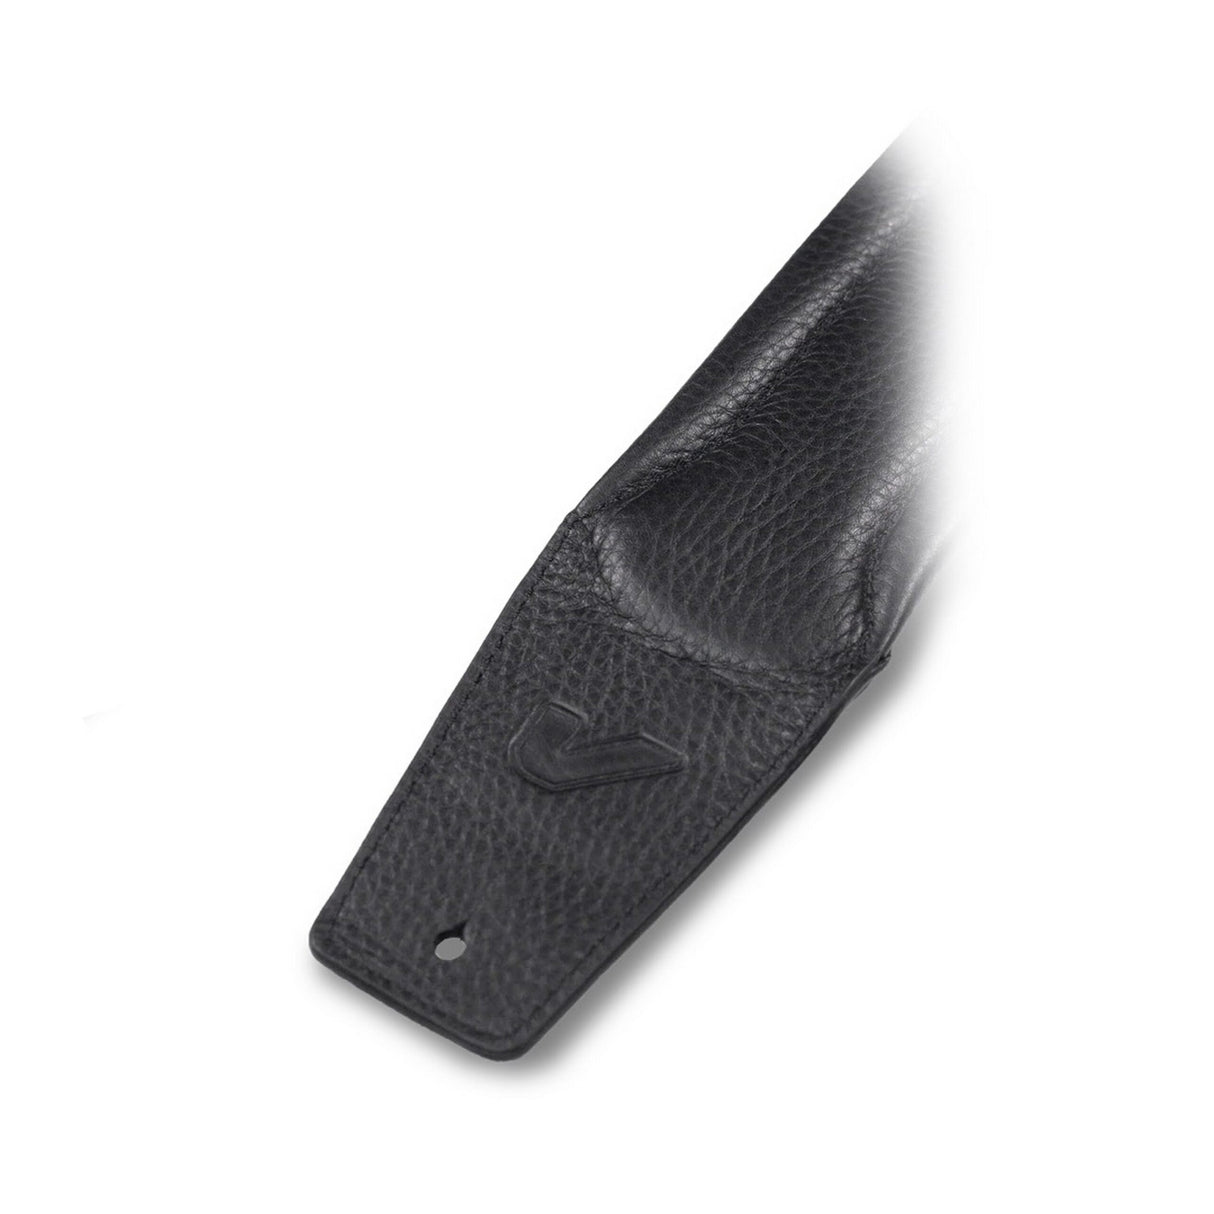 Gruv Gear SoloStrap 2 Premium Leather Guitar Strap, Black